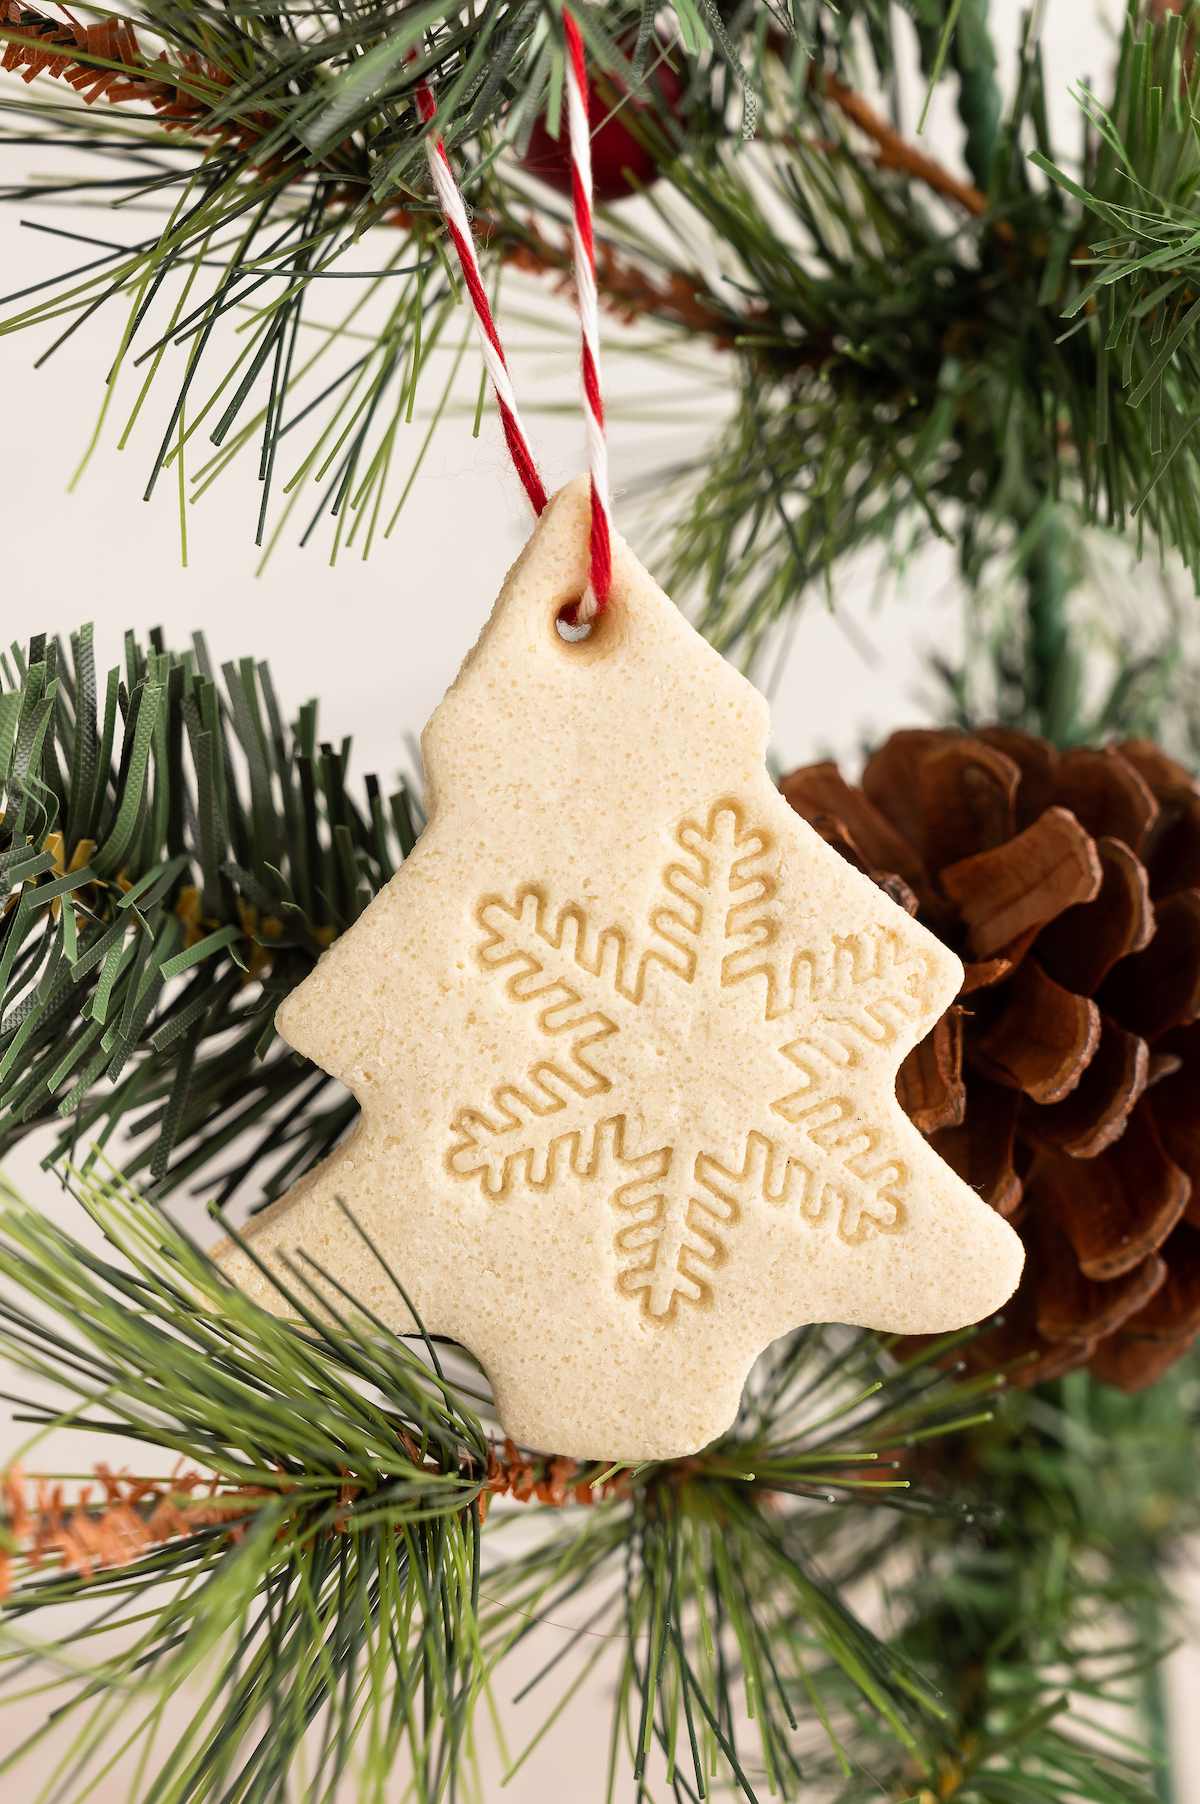 Salt dough ornament shaped like a Christmas tree, hanging on a tree branch.